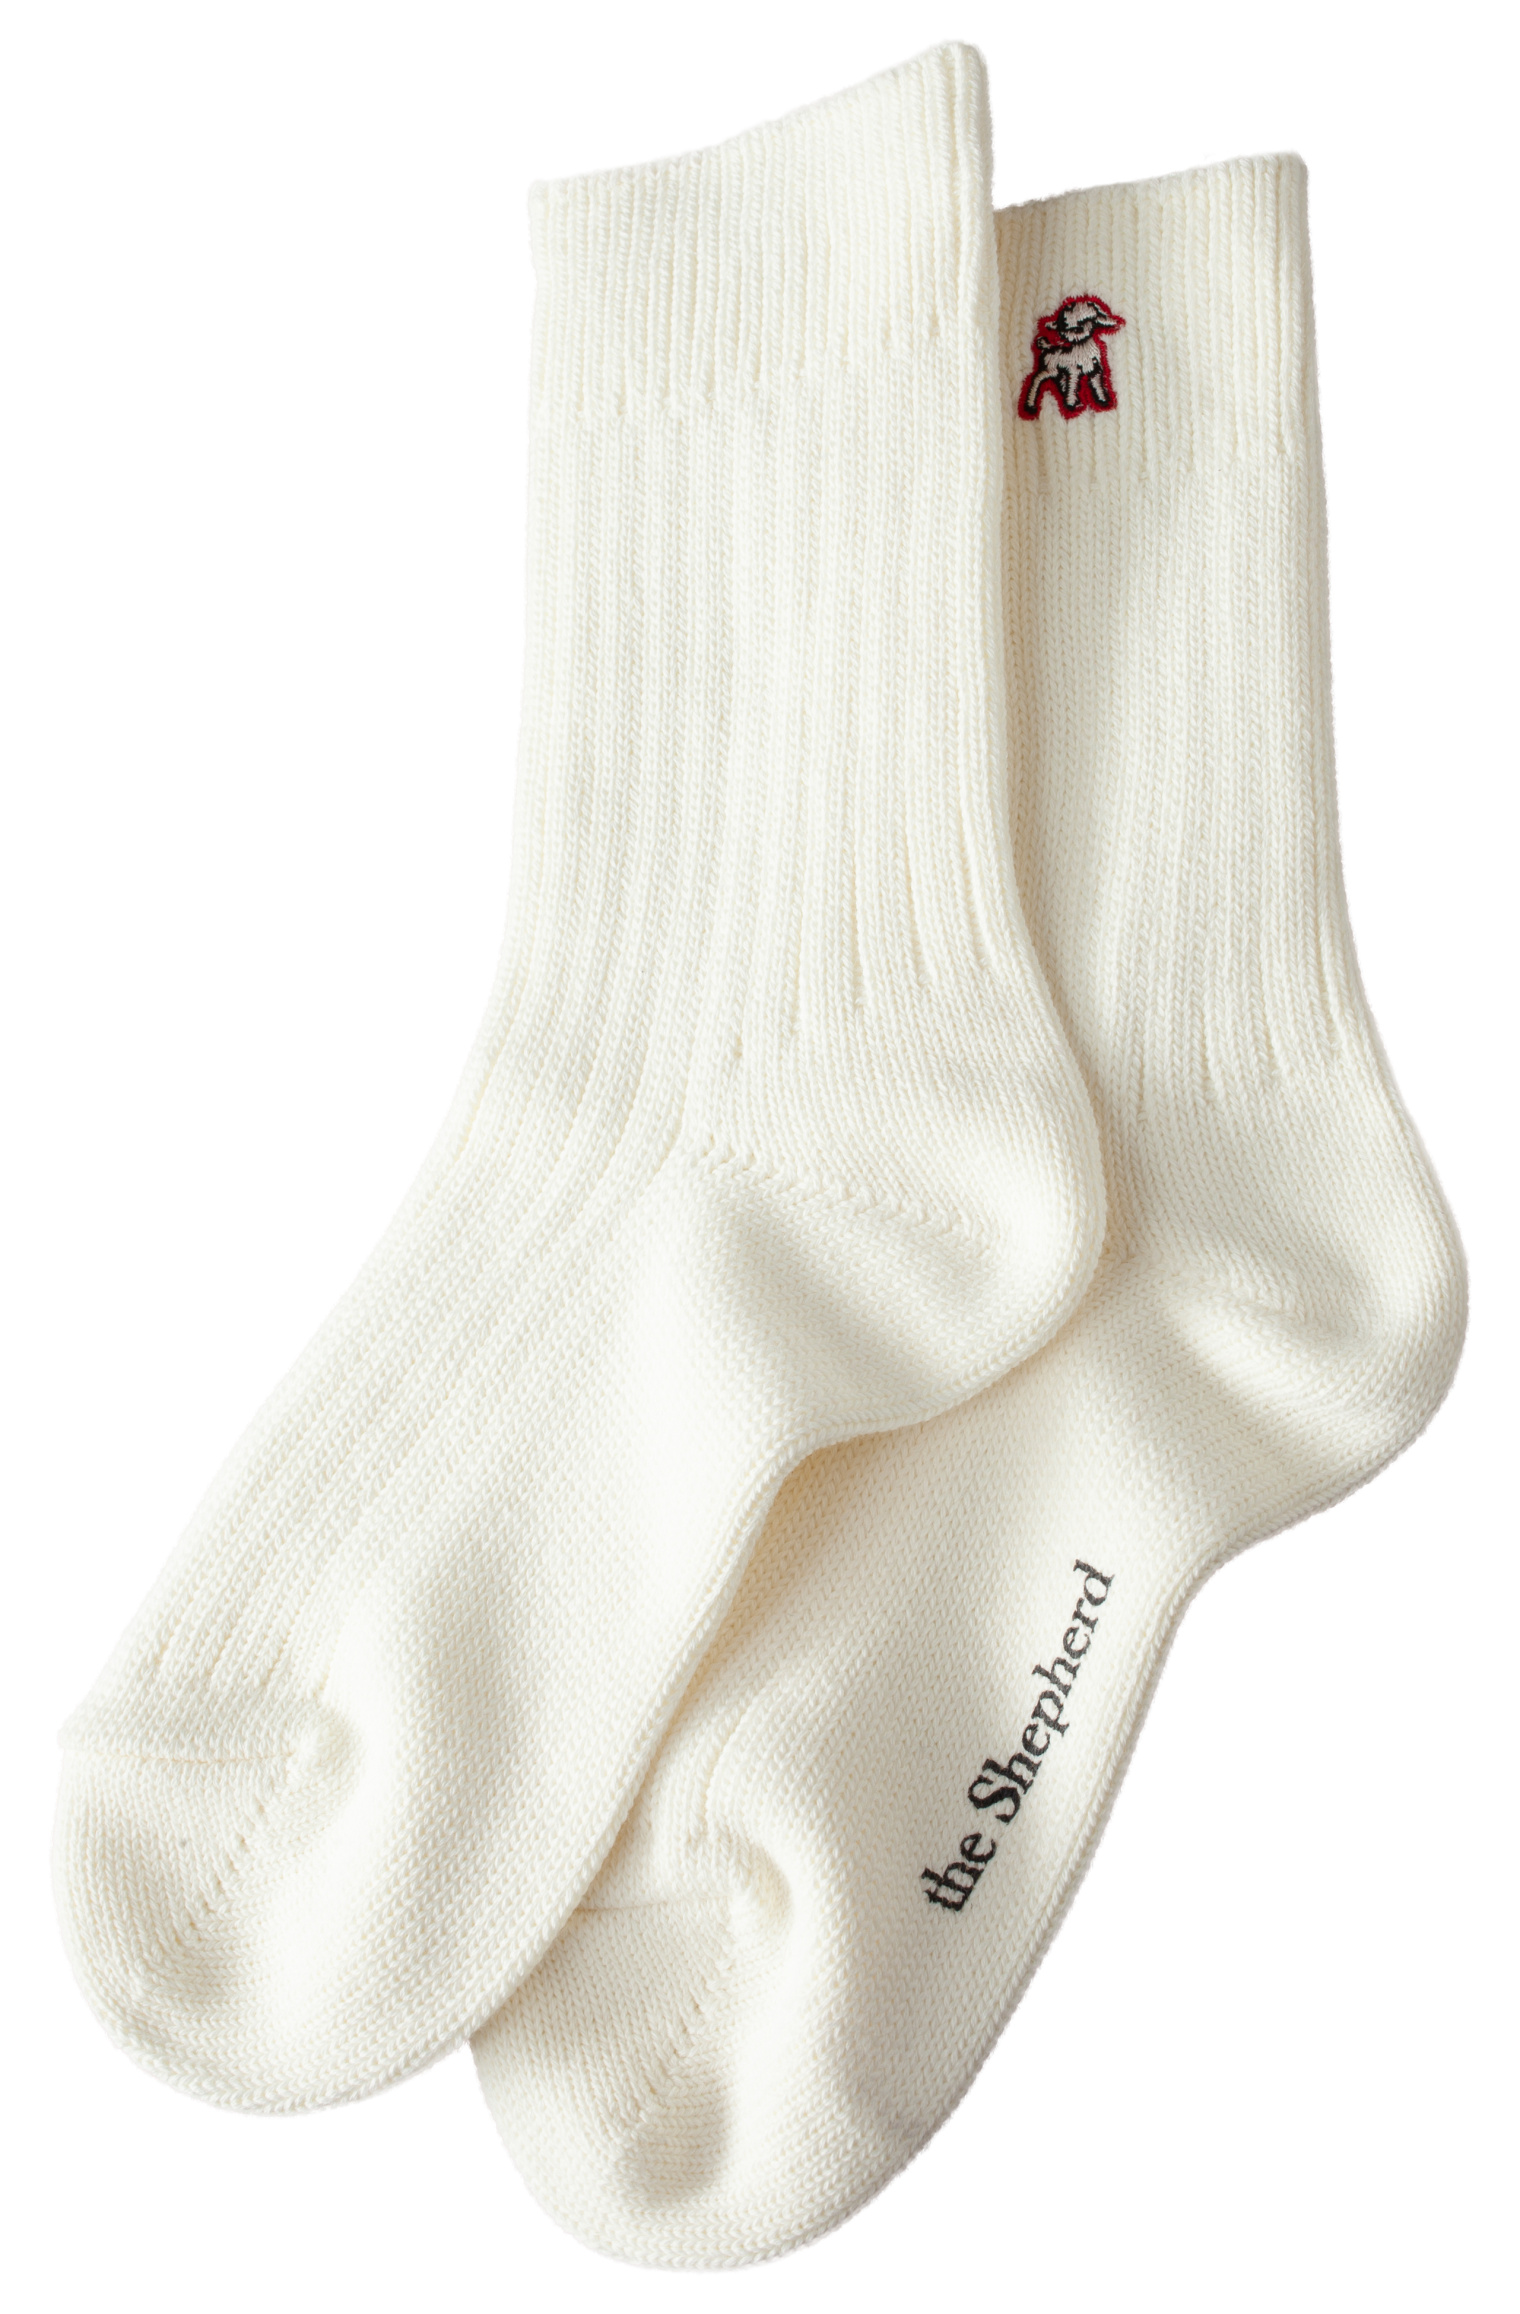 Undercover White embroidered socks